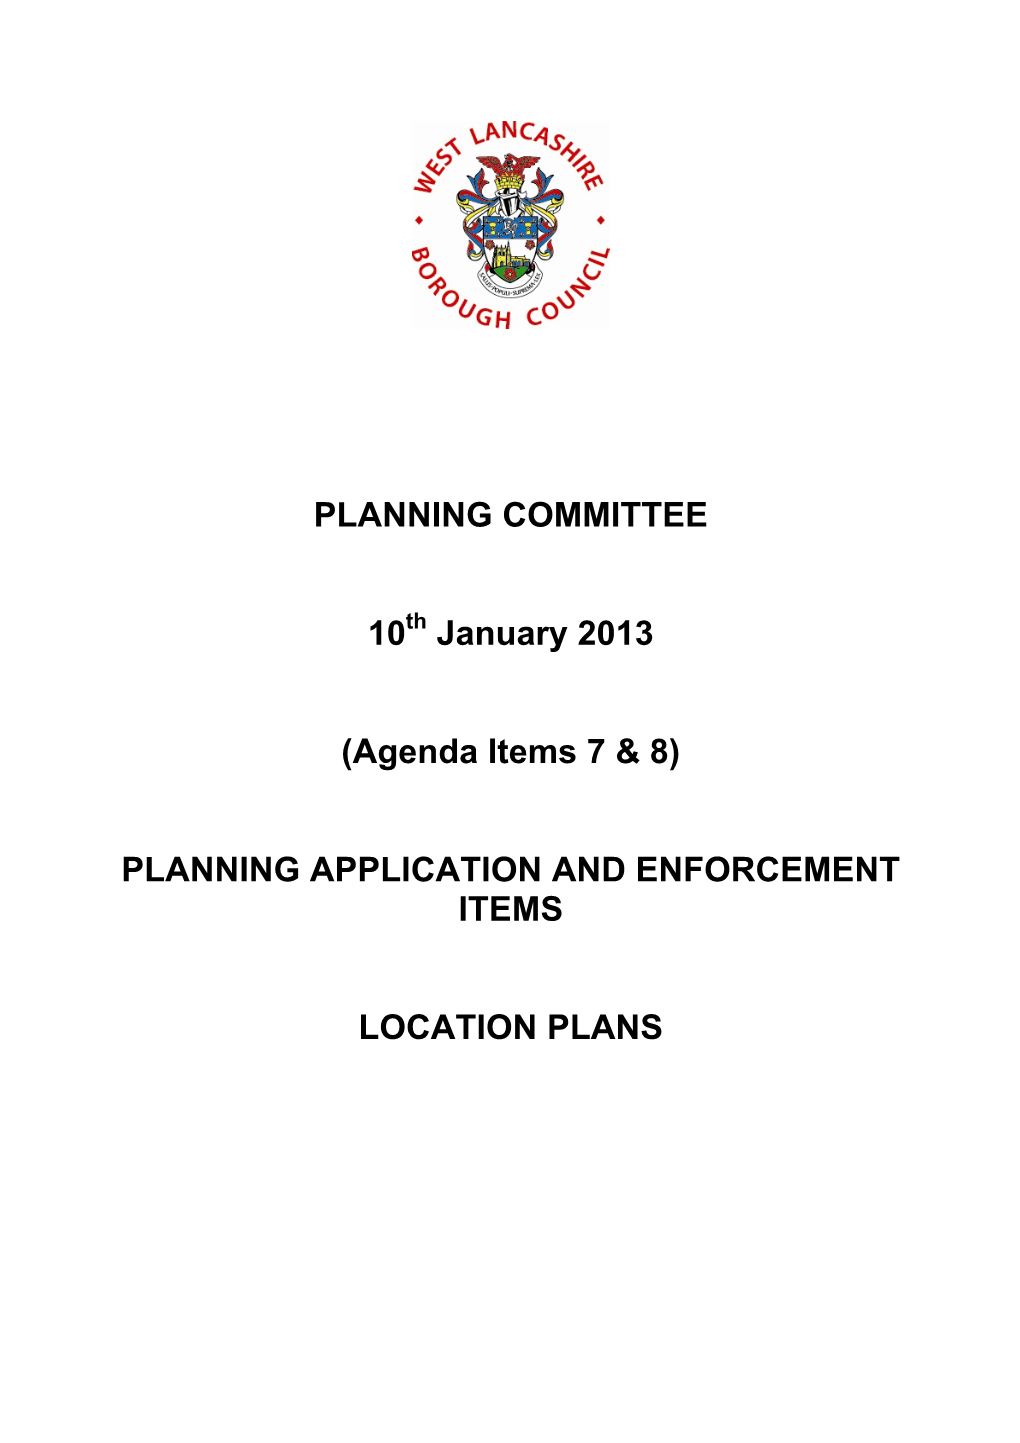 PLANNING COMMITTEE 10 January 2013 (Agenda Items 7